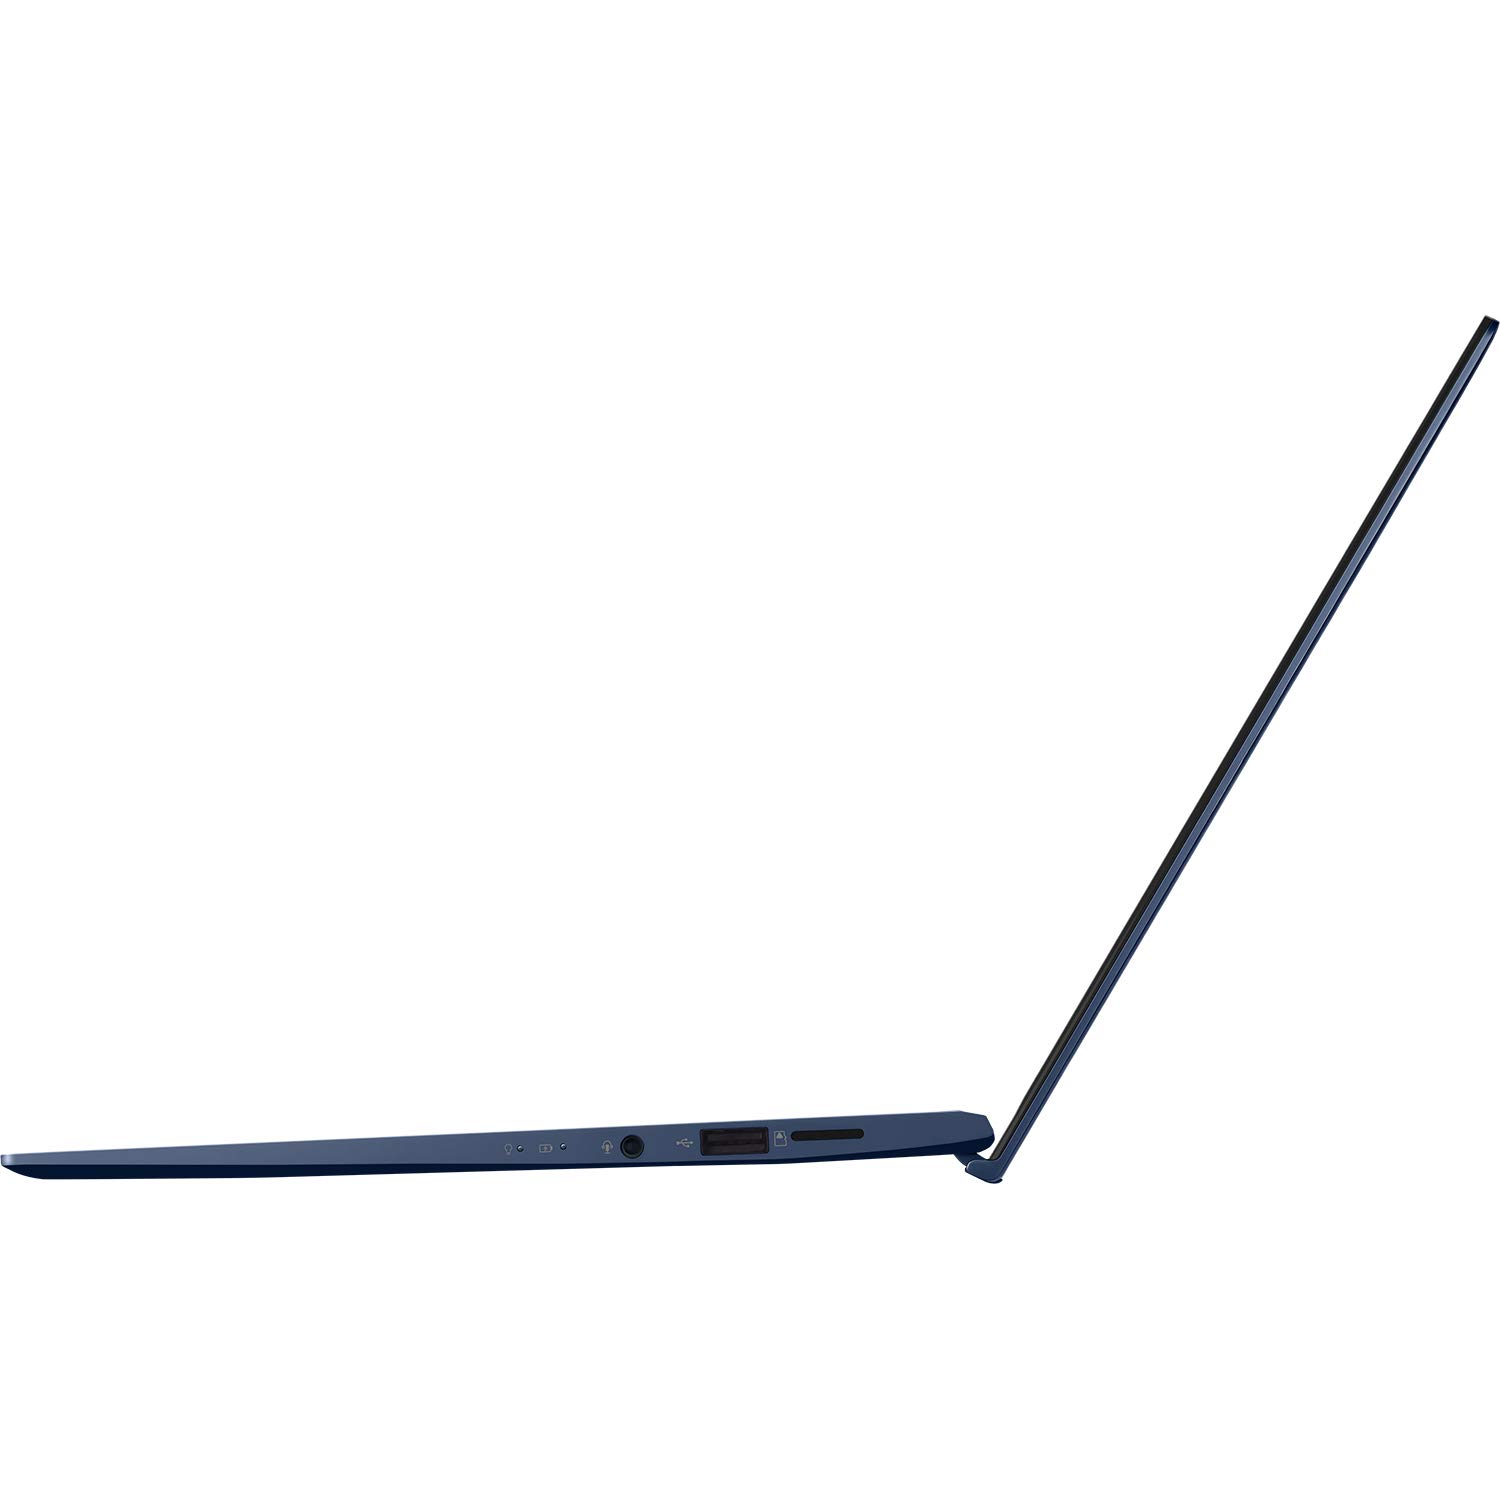 ASUS ZenBook 13 UX334FL-A5821TS Intel Core i5 10th Gen 13.3-inch FHD Thin & Light Laptop